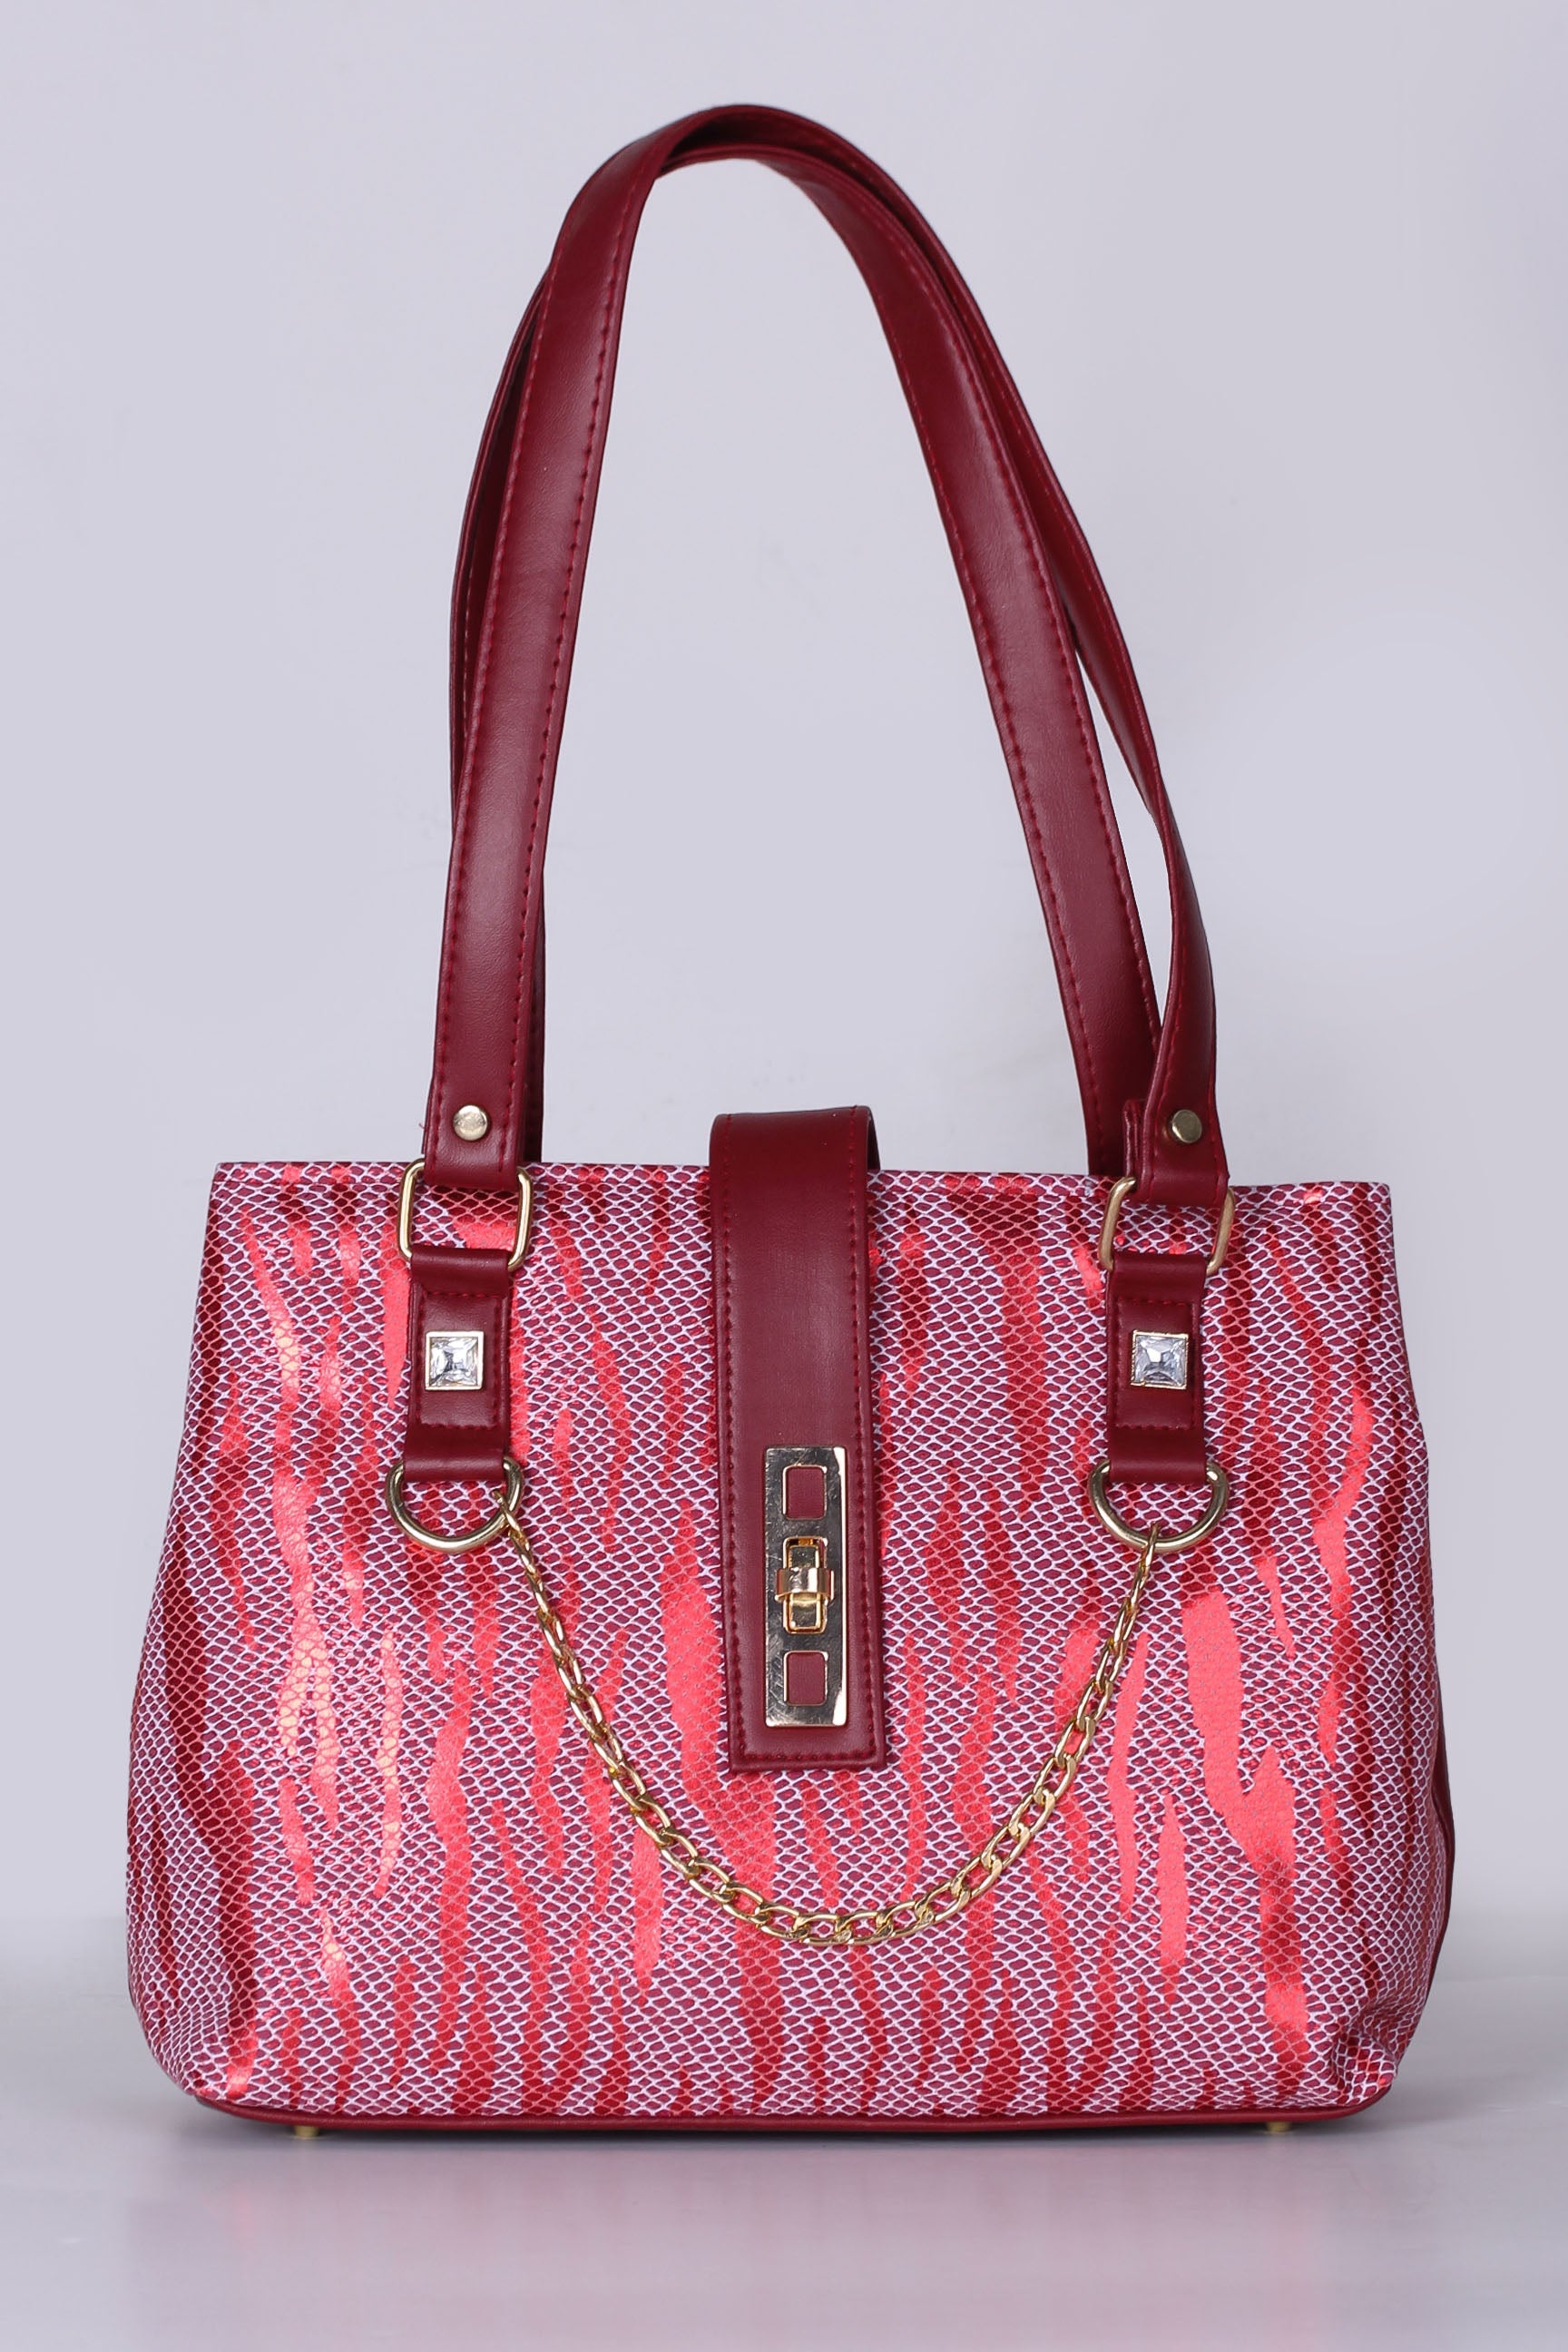 Hand Bags for Women |Ladies Purse MFD-260-B